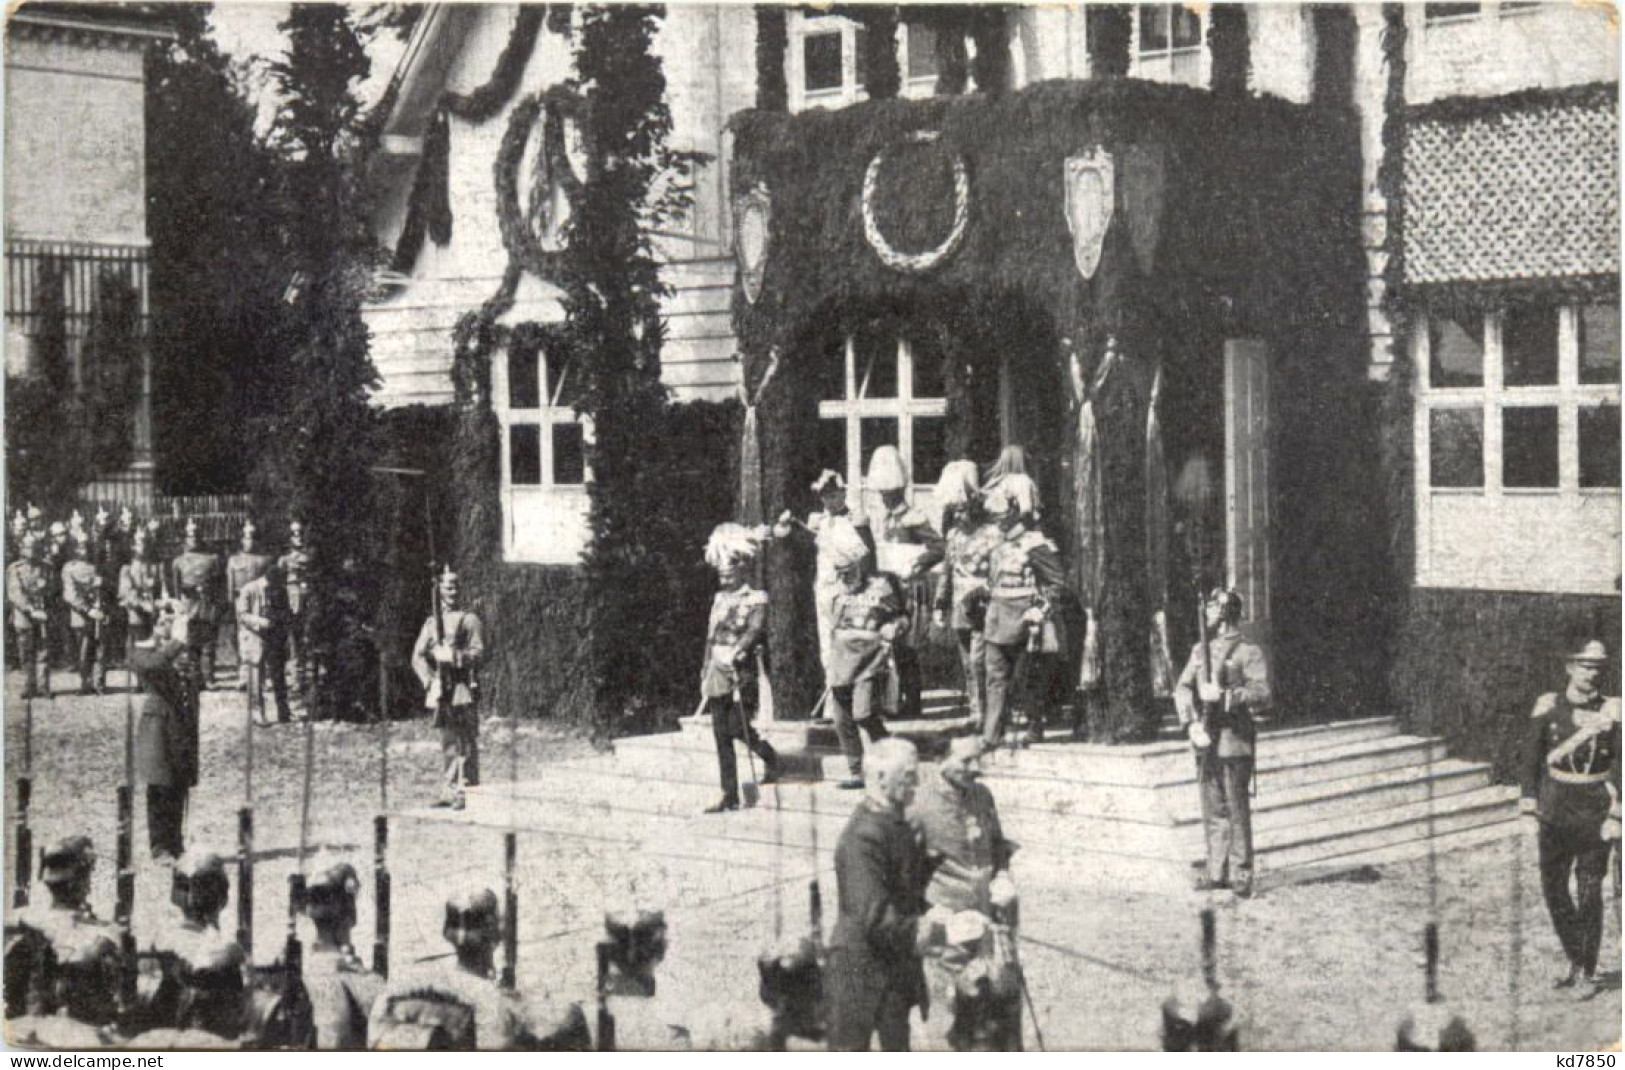 Jahrhundertfeier In Kelheim 1913 - Kelheim